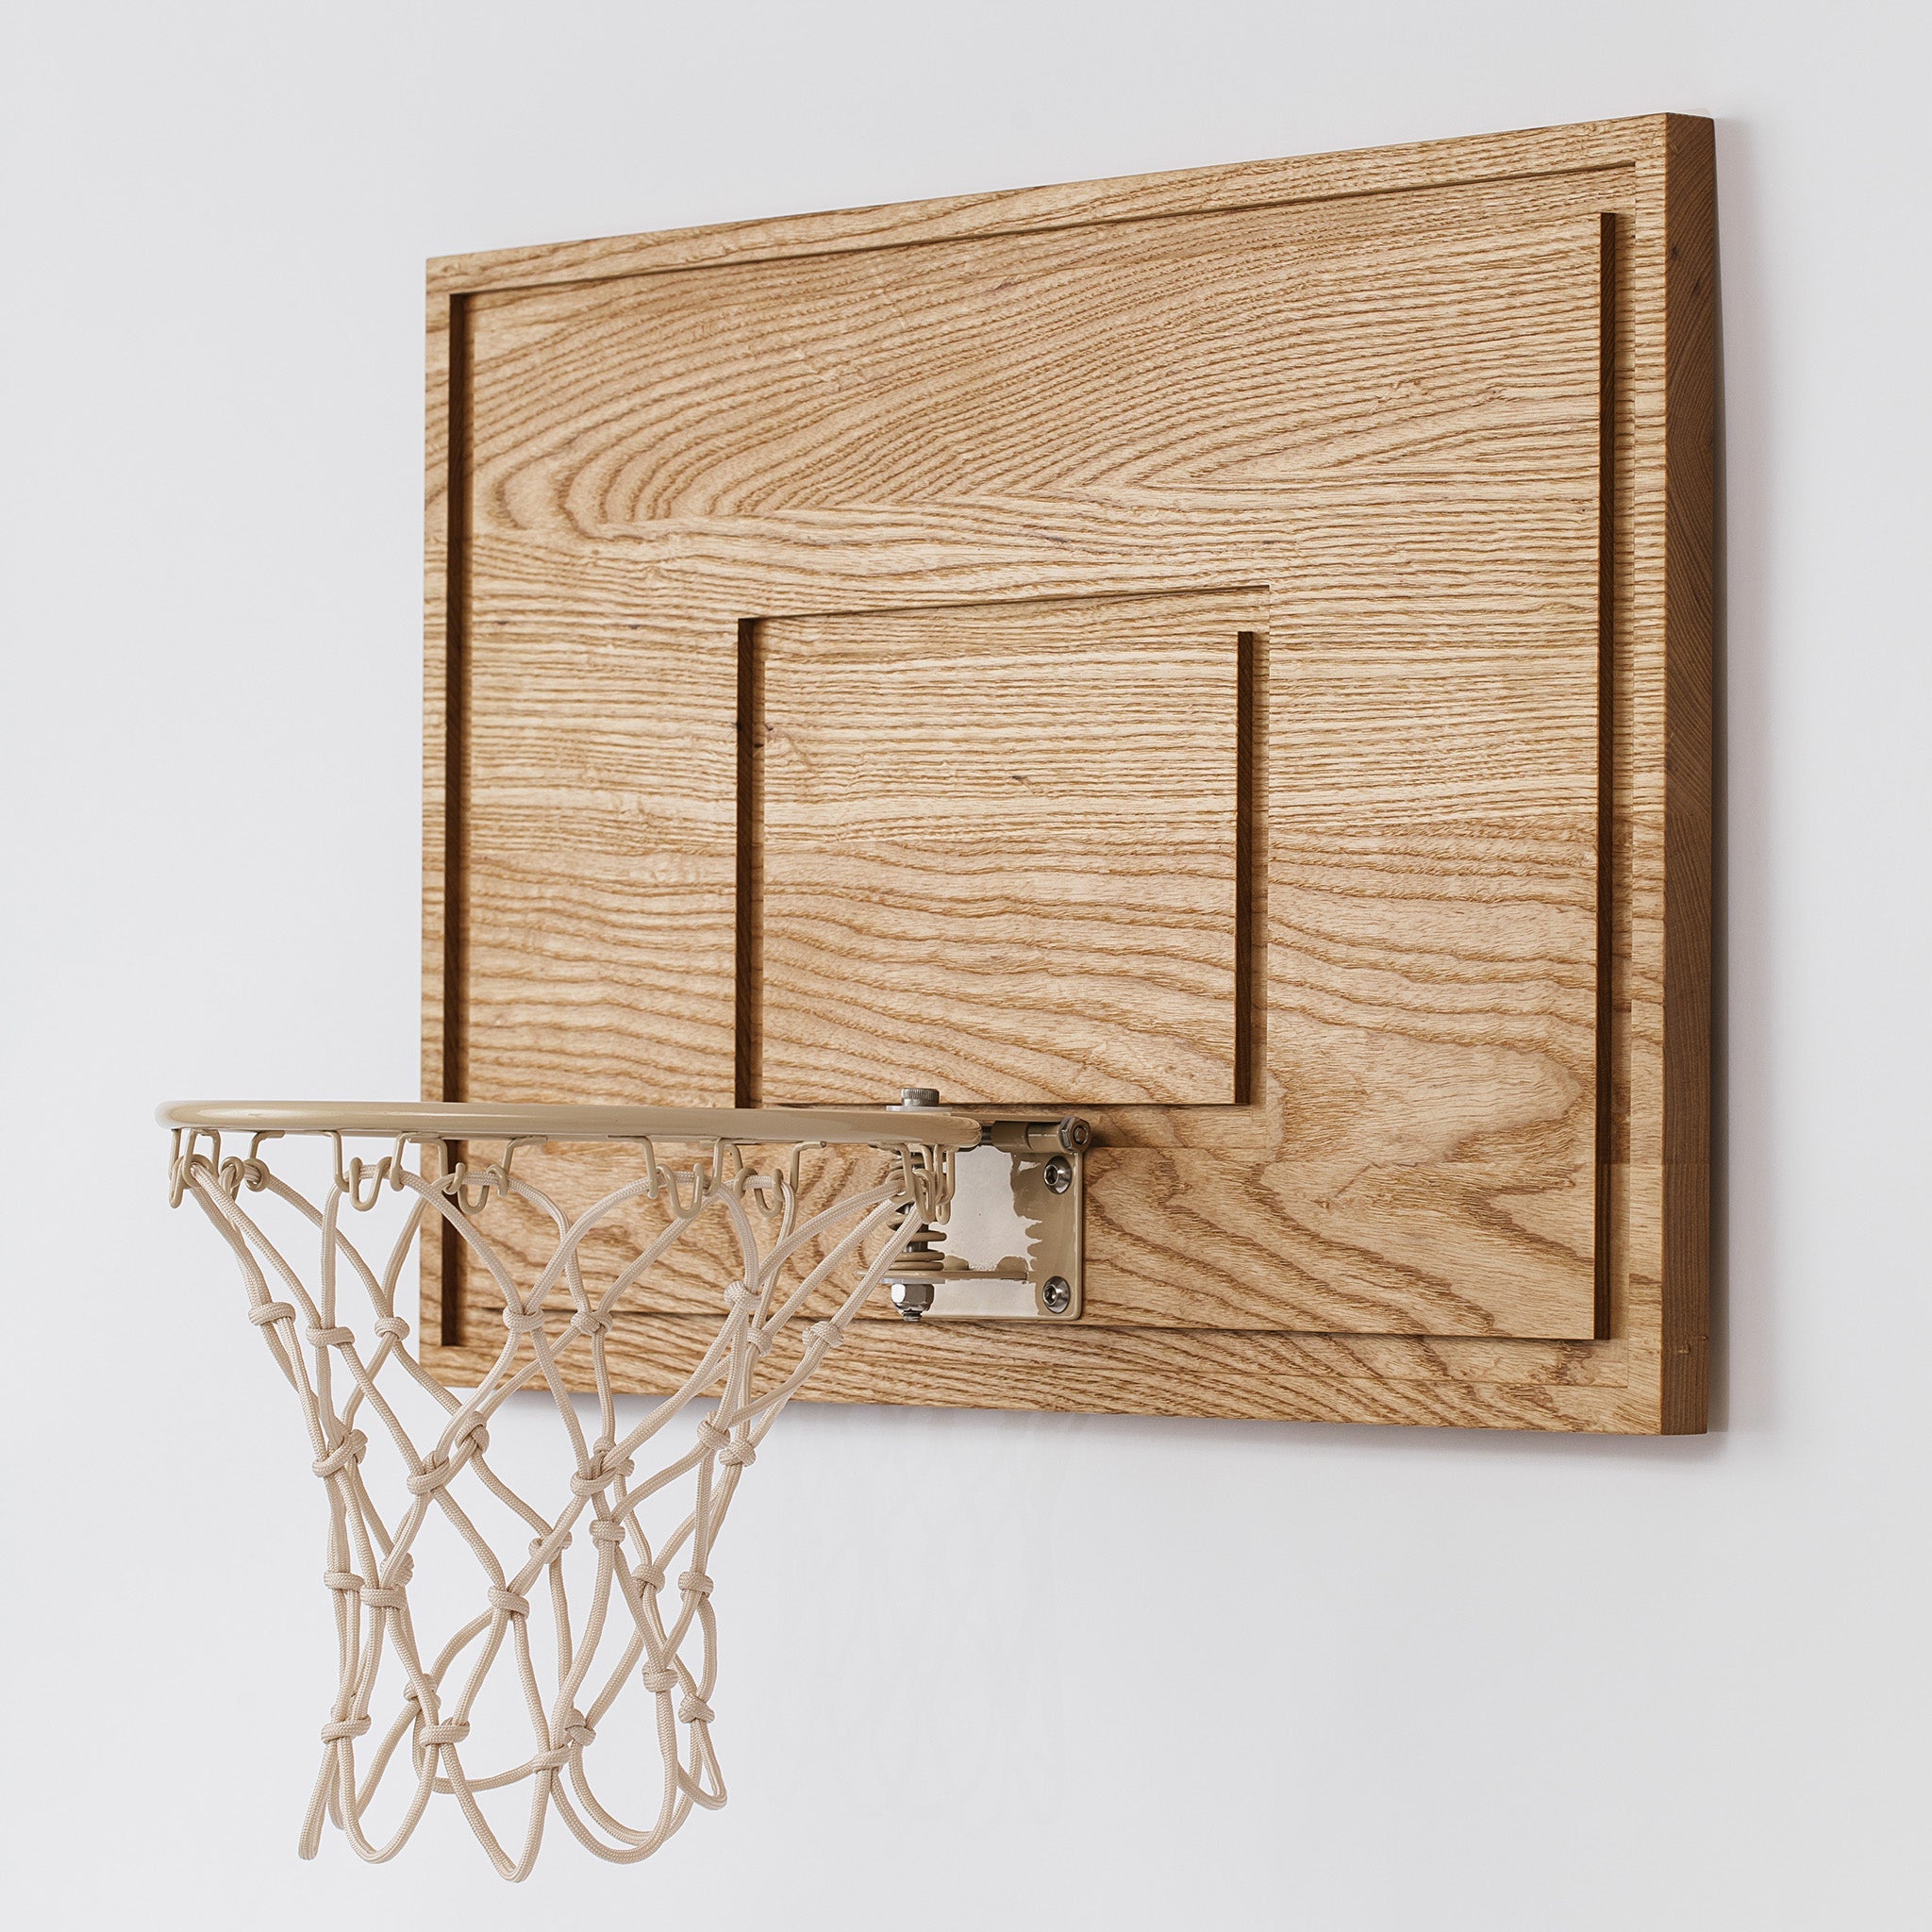 Natural ash hardwood wall mounted mini basketball hoop with breakaway rim -ash